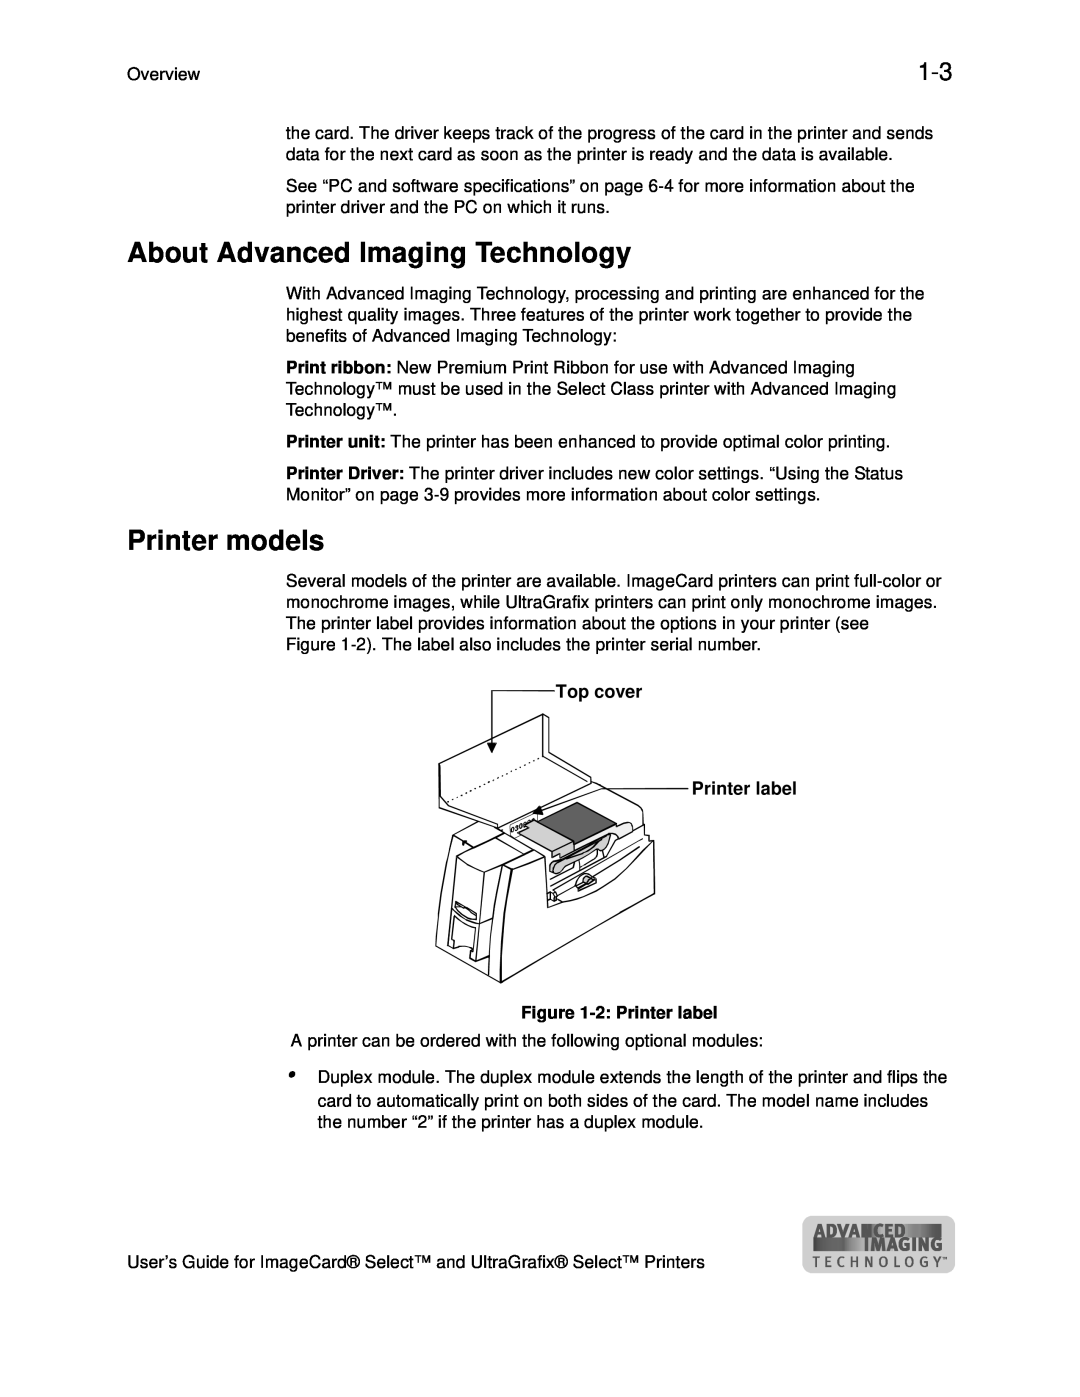 Datacard Group ImageCard SelectTM and UltraGrafix SelectTM Printers About Advanced Imaging Technology, Printer models 